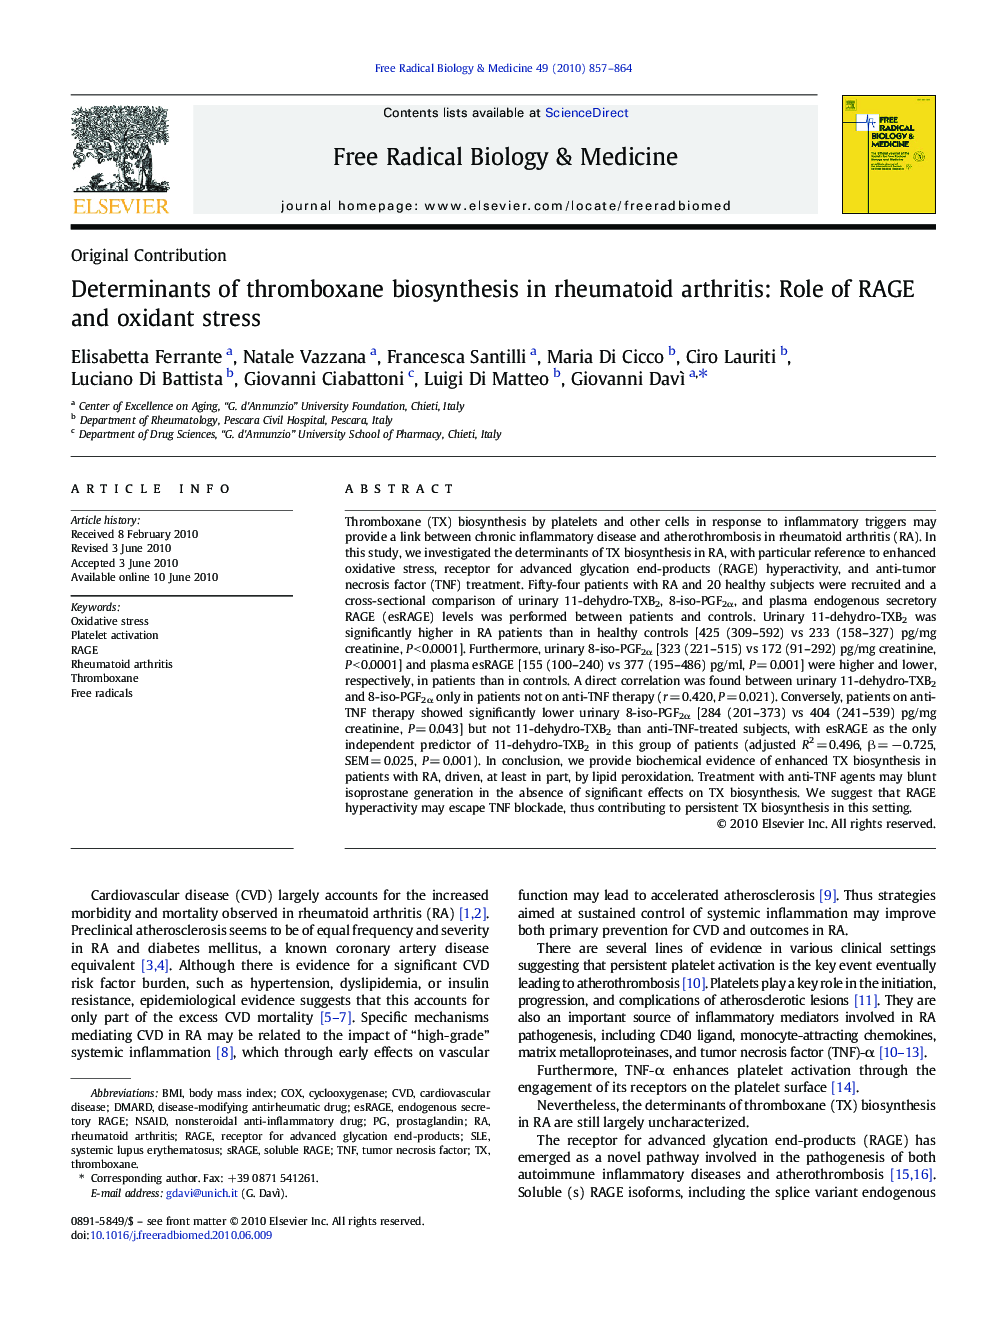 Determinants of thromboxane biosynthesis in rheumatoid arthritis: Role of RAGE and oxidant stress